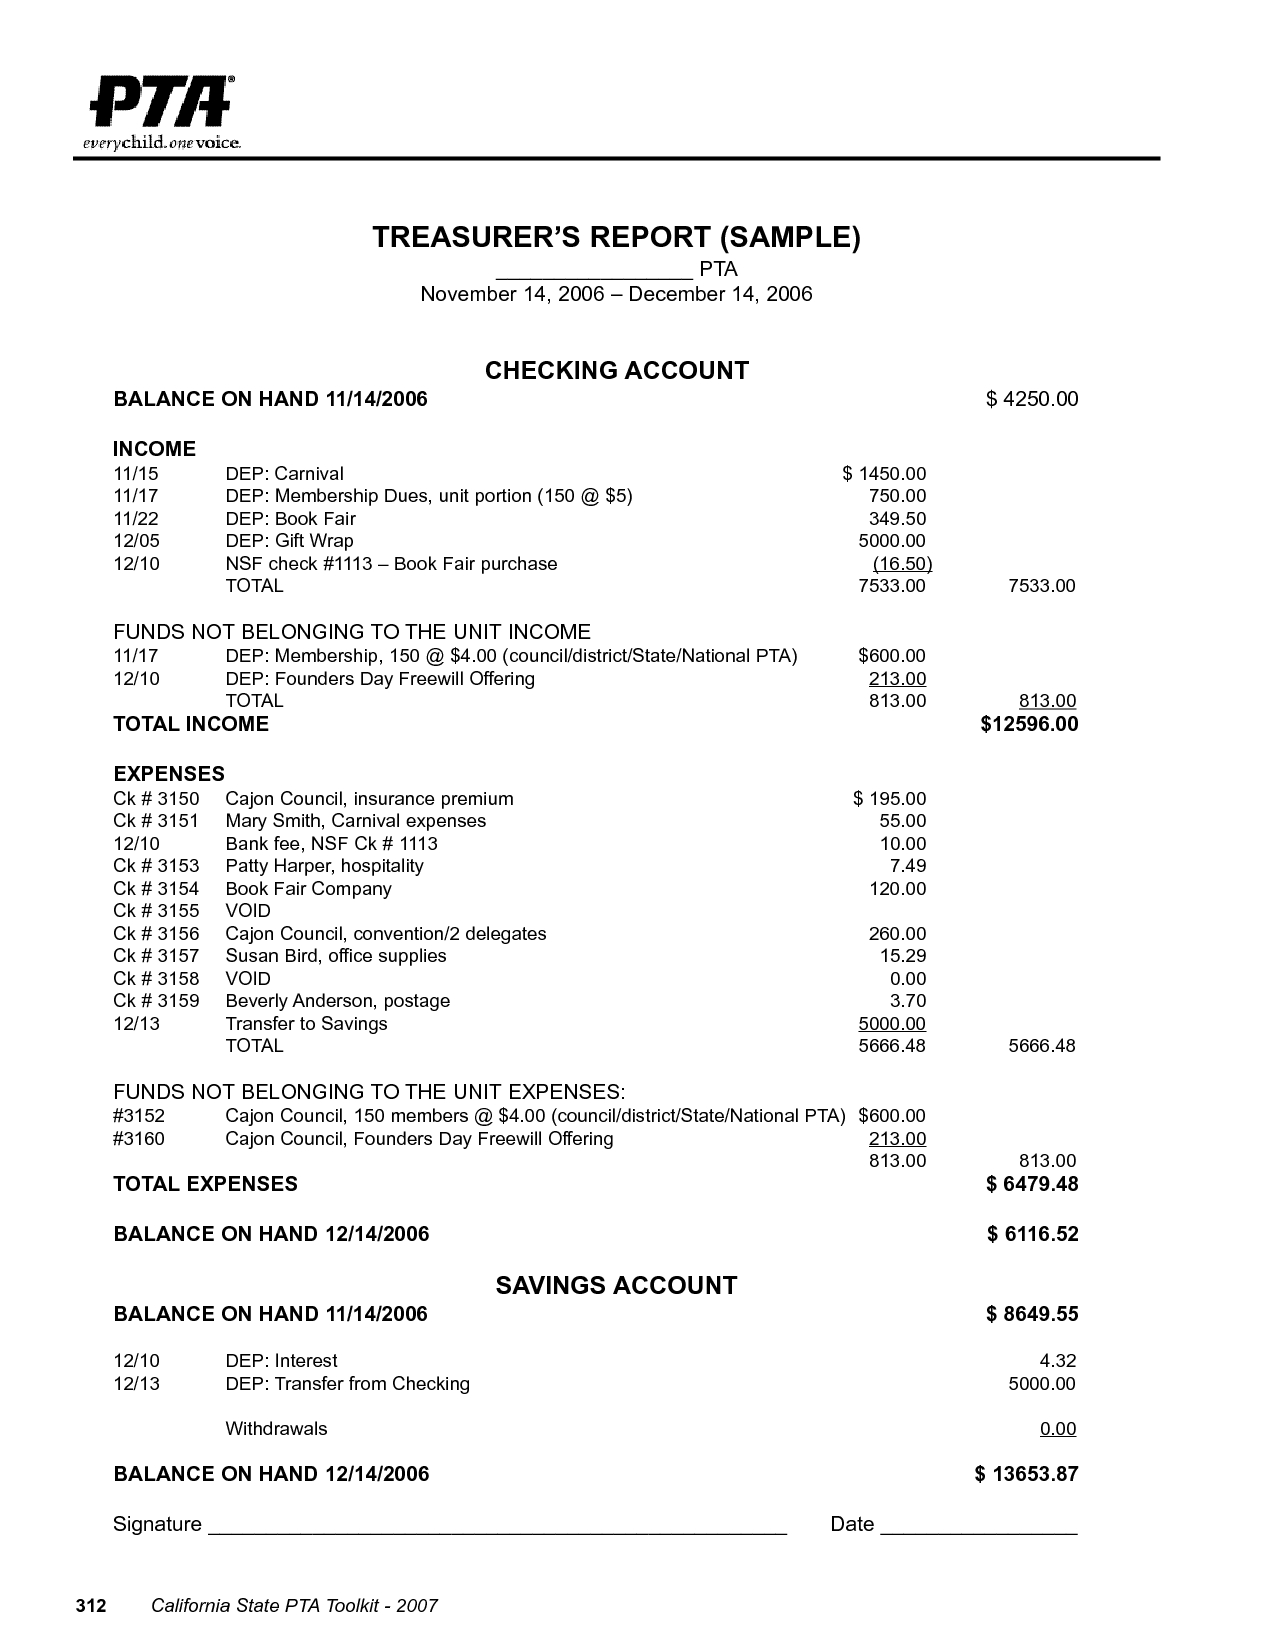 Treasurer Report Format - Calep.midnightpig.co For Non Profit Treasurer Report Template